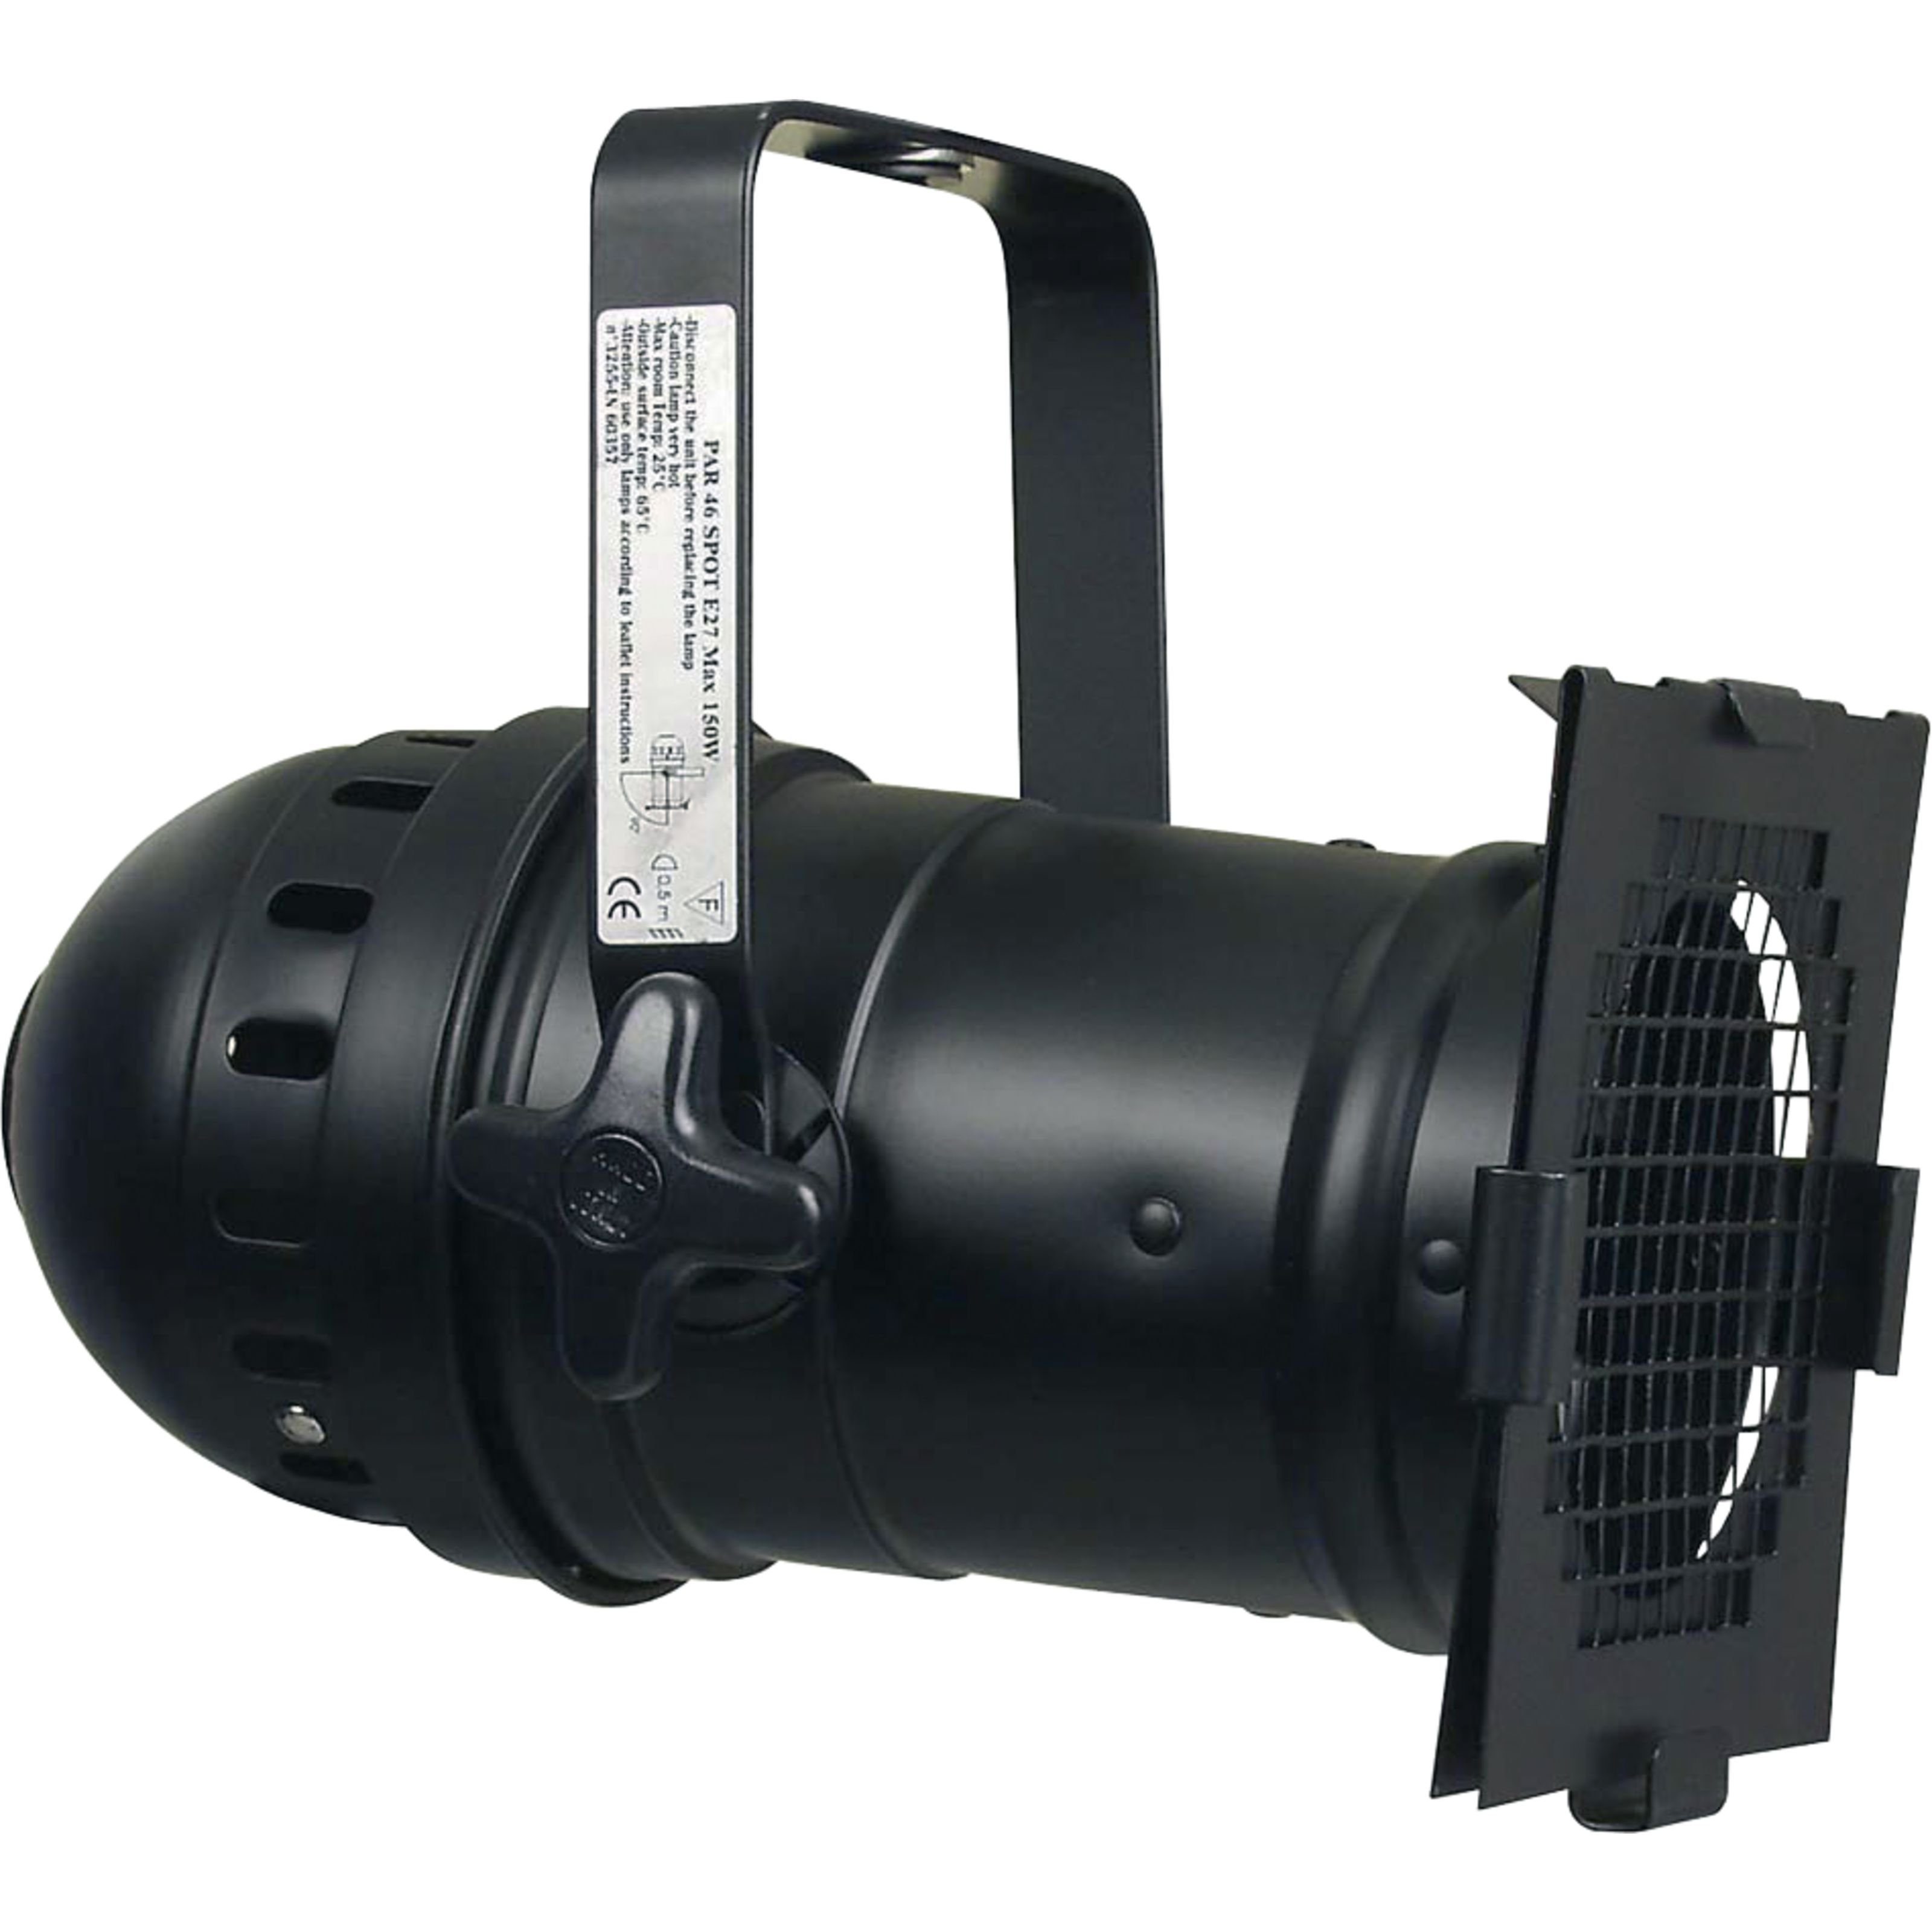 EUROLITE LED Discolicht, PAR 46 Gehäuse Black E27 Sockel inkl. Filterrahmen - PAR Scheinwerfer